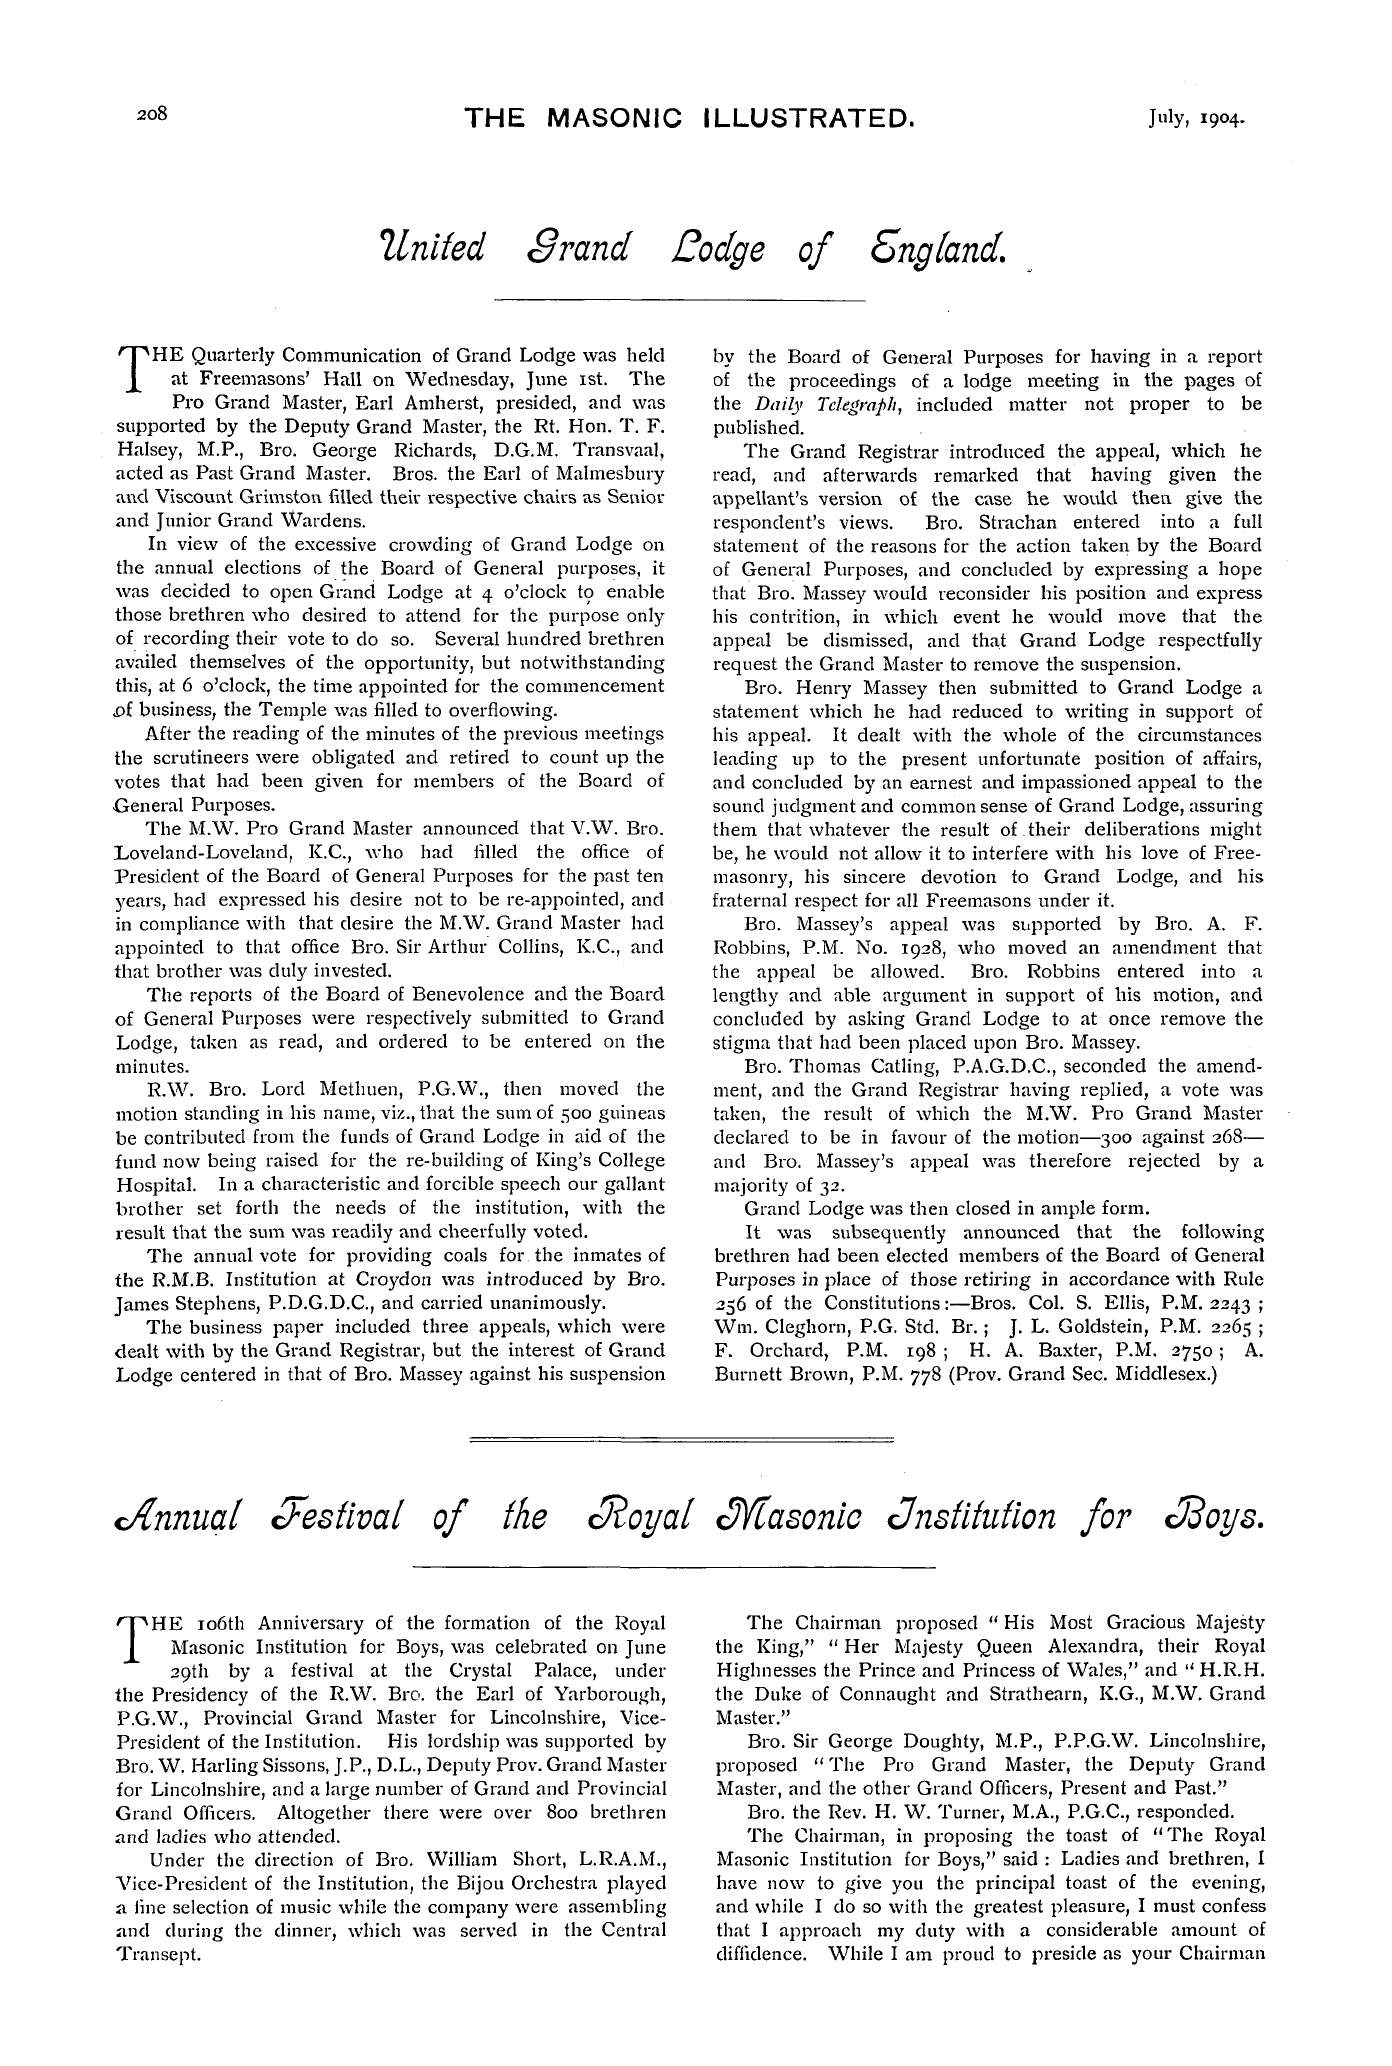 The Masonic Illustrated: 1904-07-01: 2